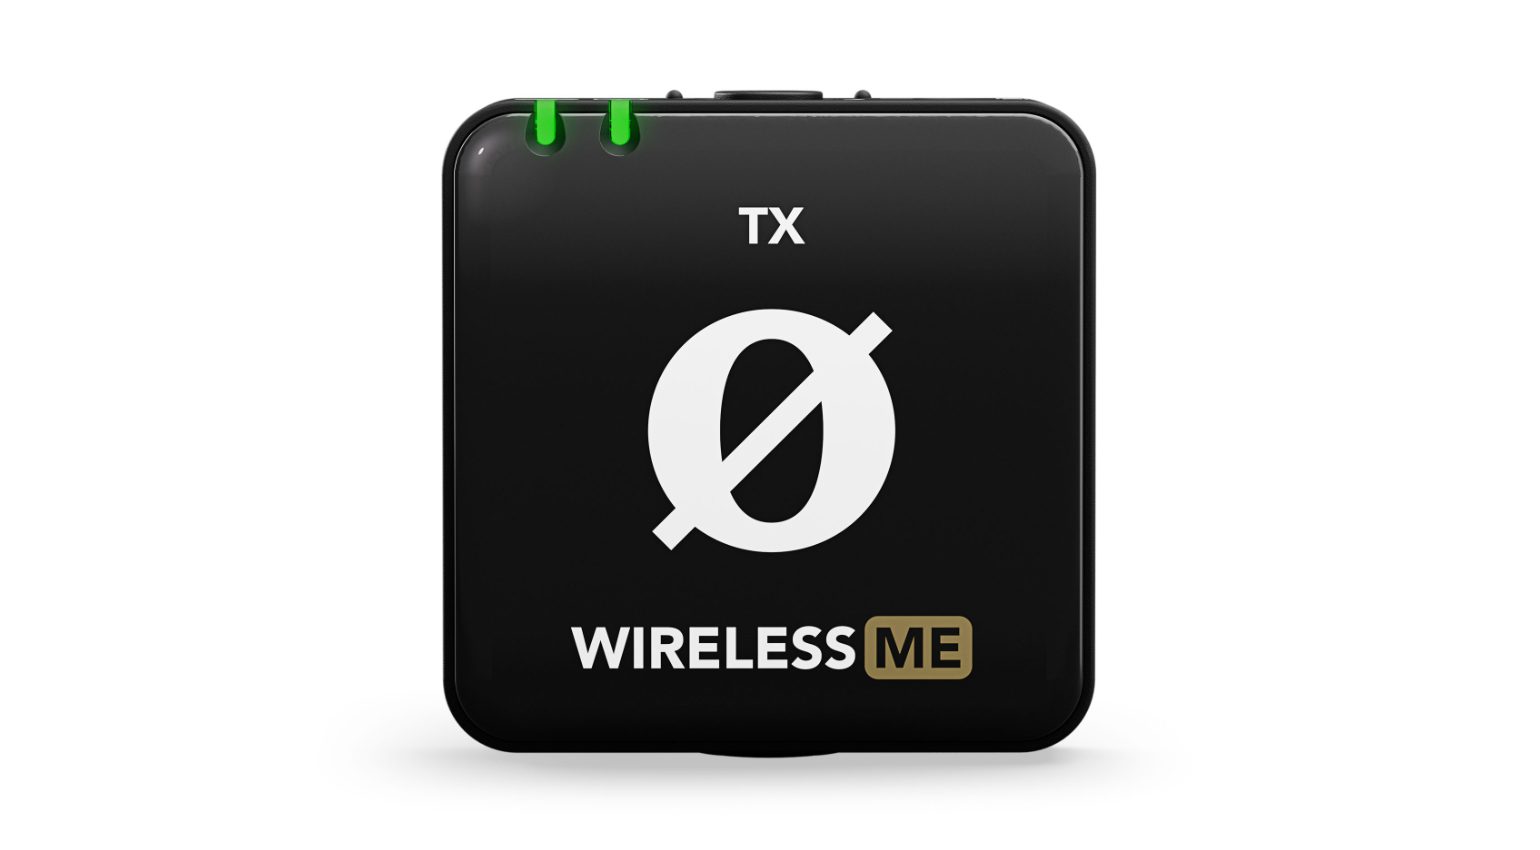 Rode Wireless ME TX Sender